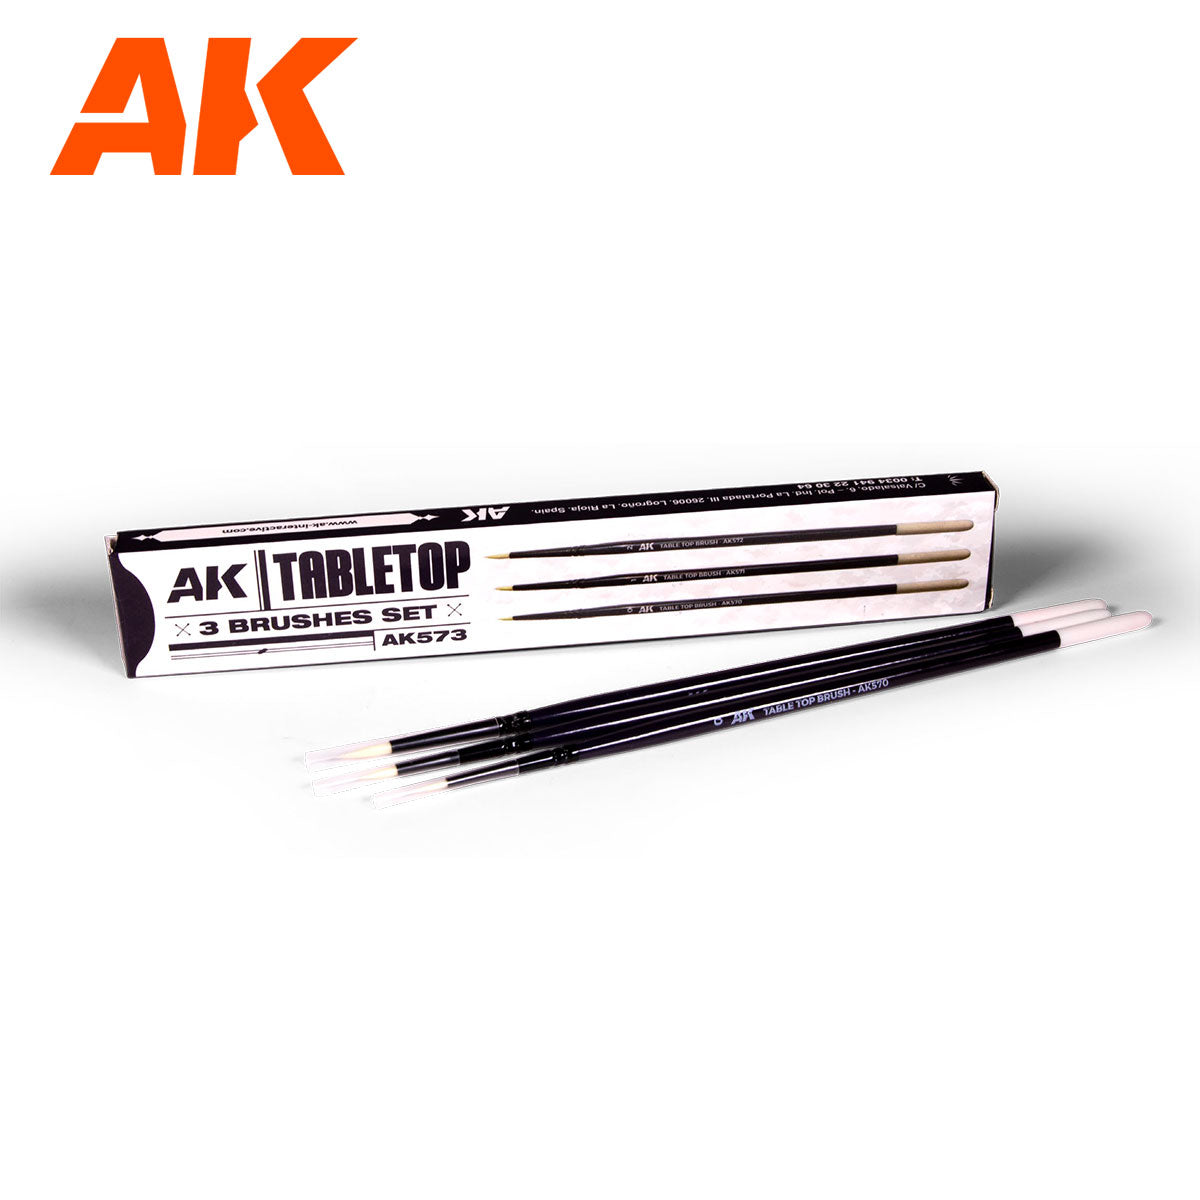 AK Table Top Brushes Set 0, 1, 2